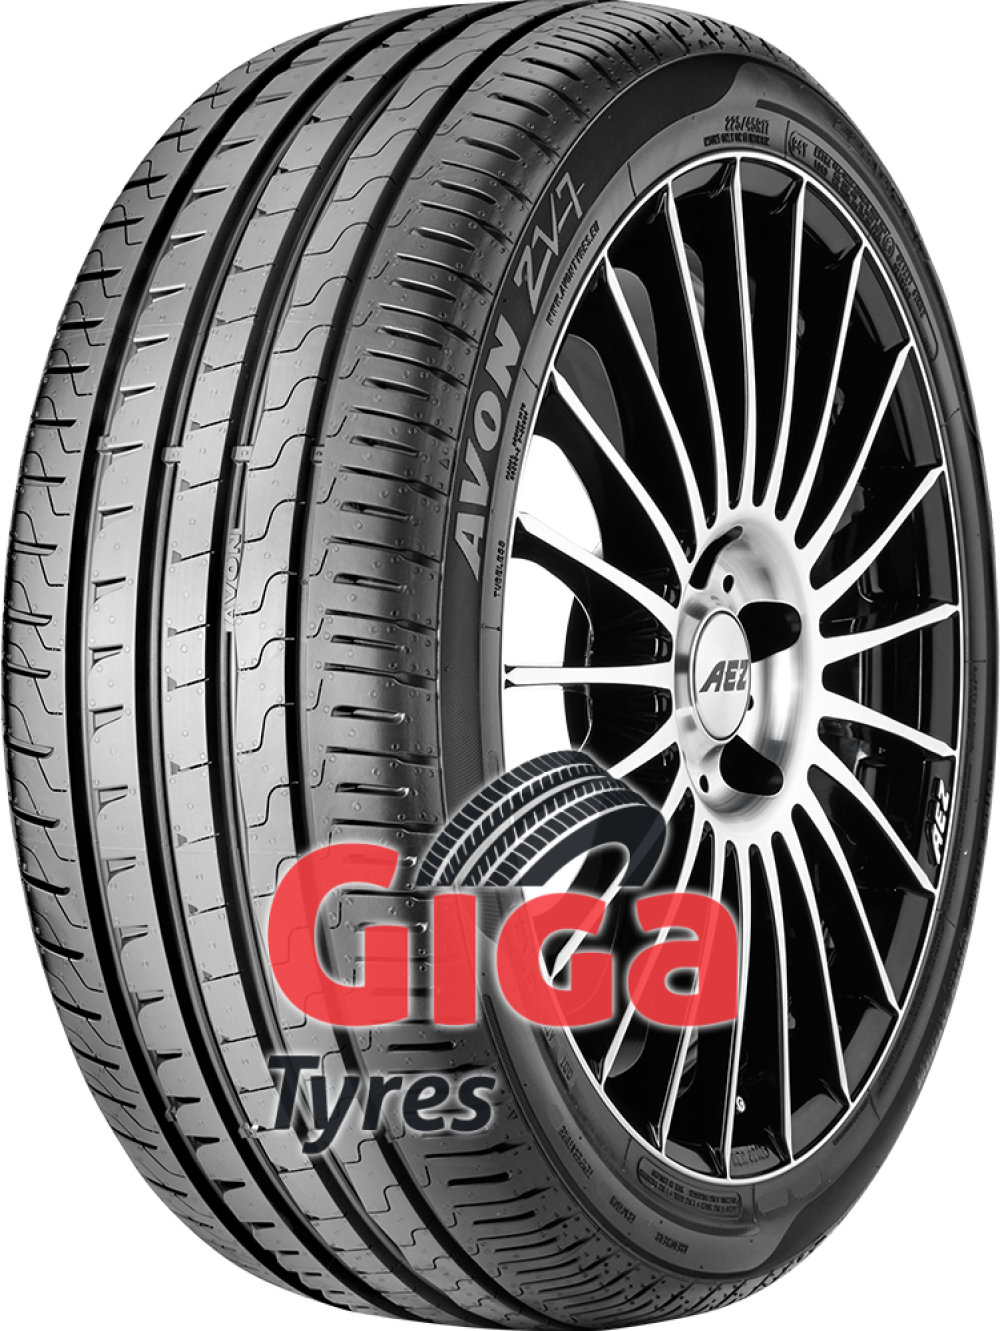 195-55-R16 Car Tyre Prices  Buy 195-55-R16 Car Tyres Online -Tyrewaale